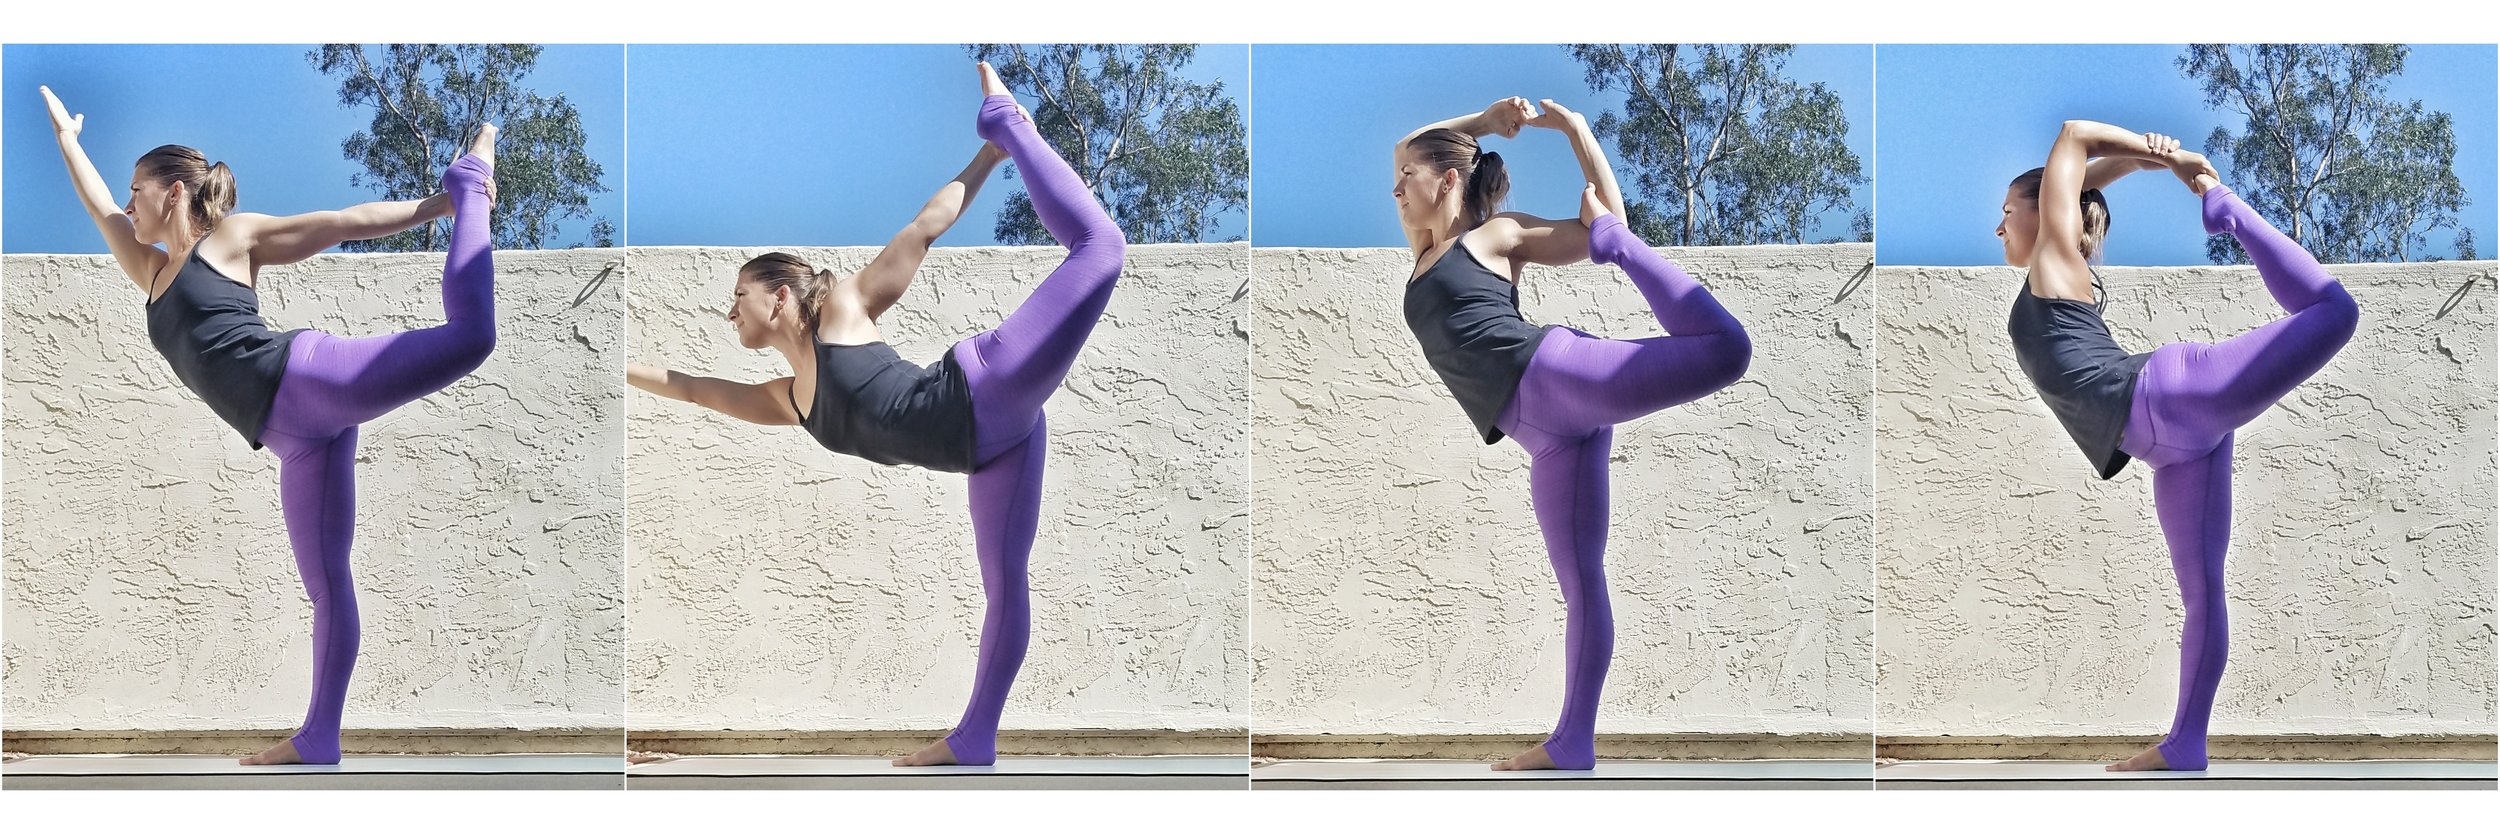 Yoga - One-Legged King Pigeon Pose - Yoga, Performance Art. - Walmart.com